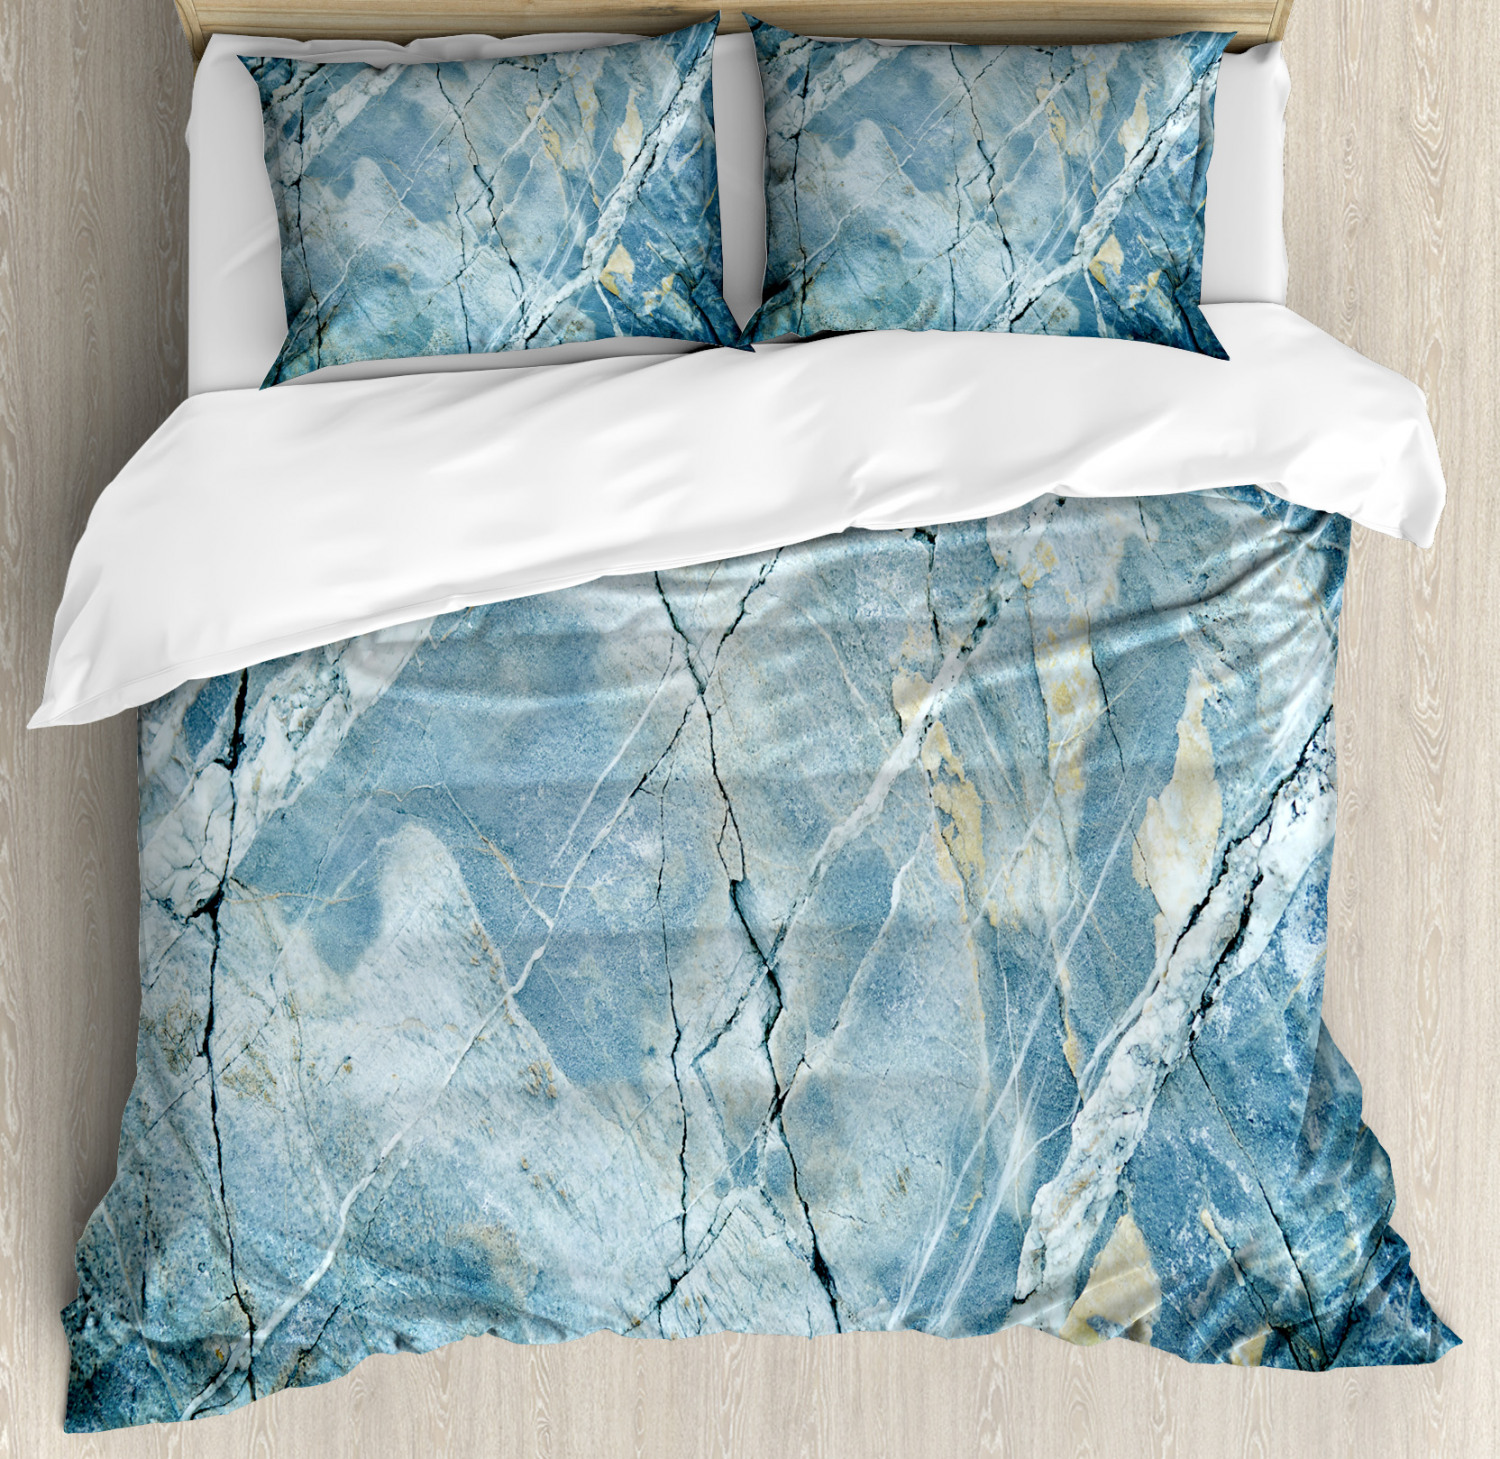 Marble Duvet Cover Set With Pillow Shams Granite Stone Artistic Print